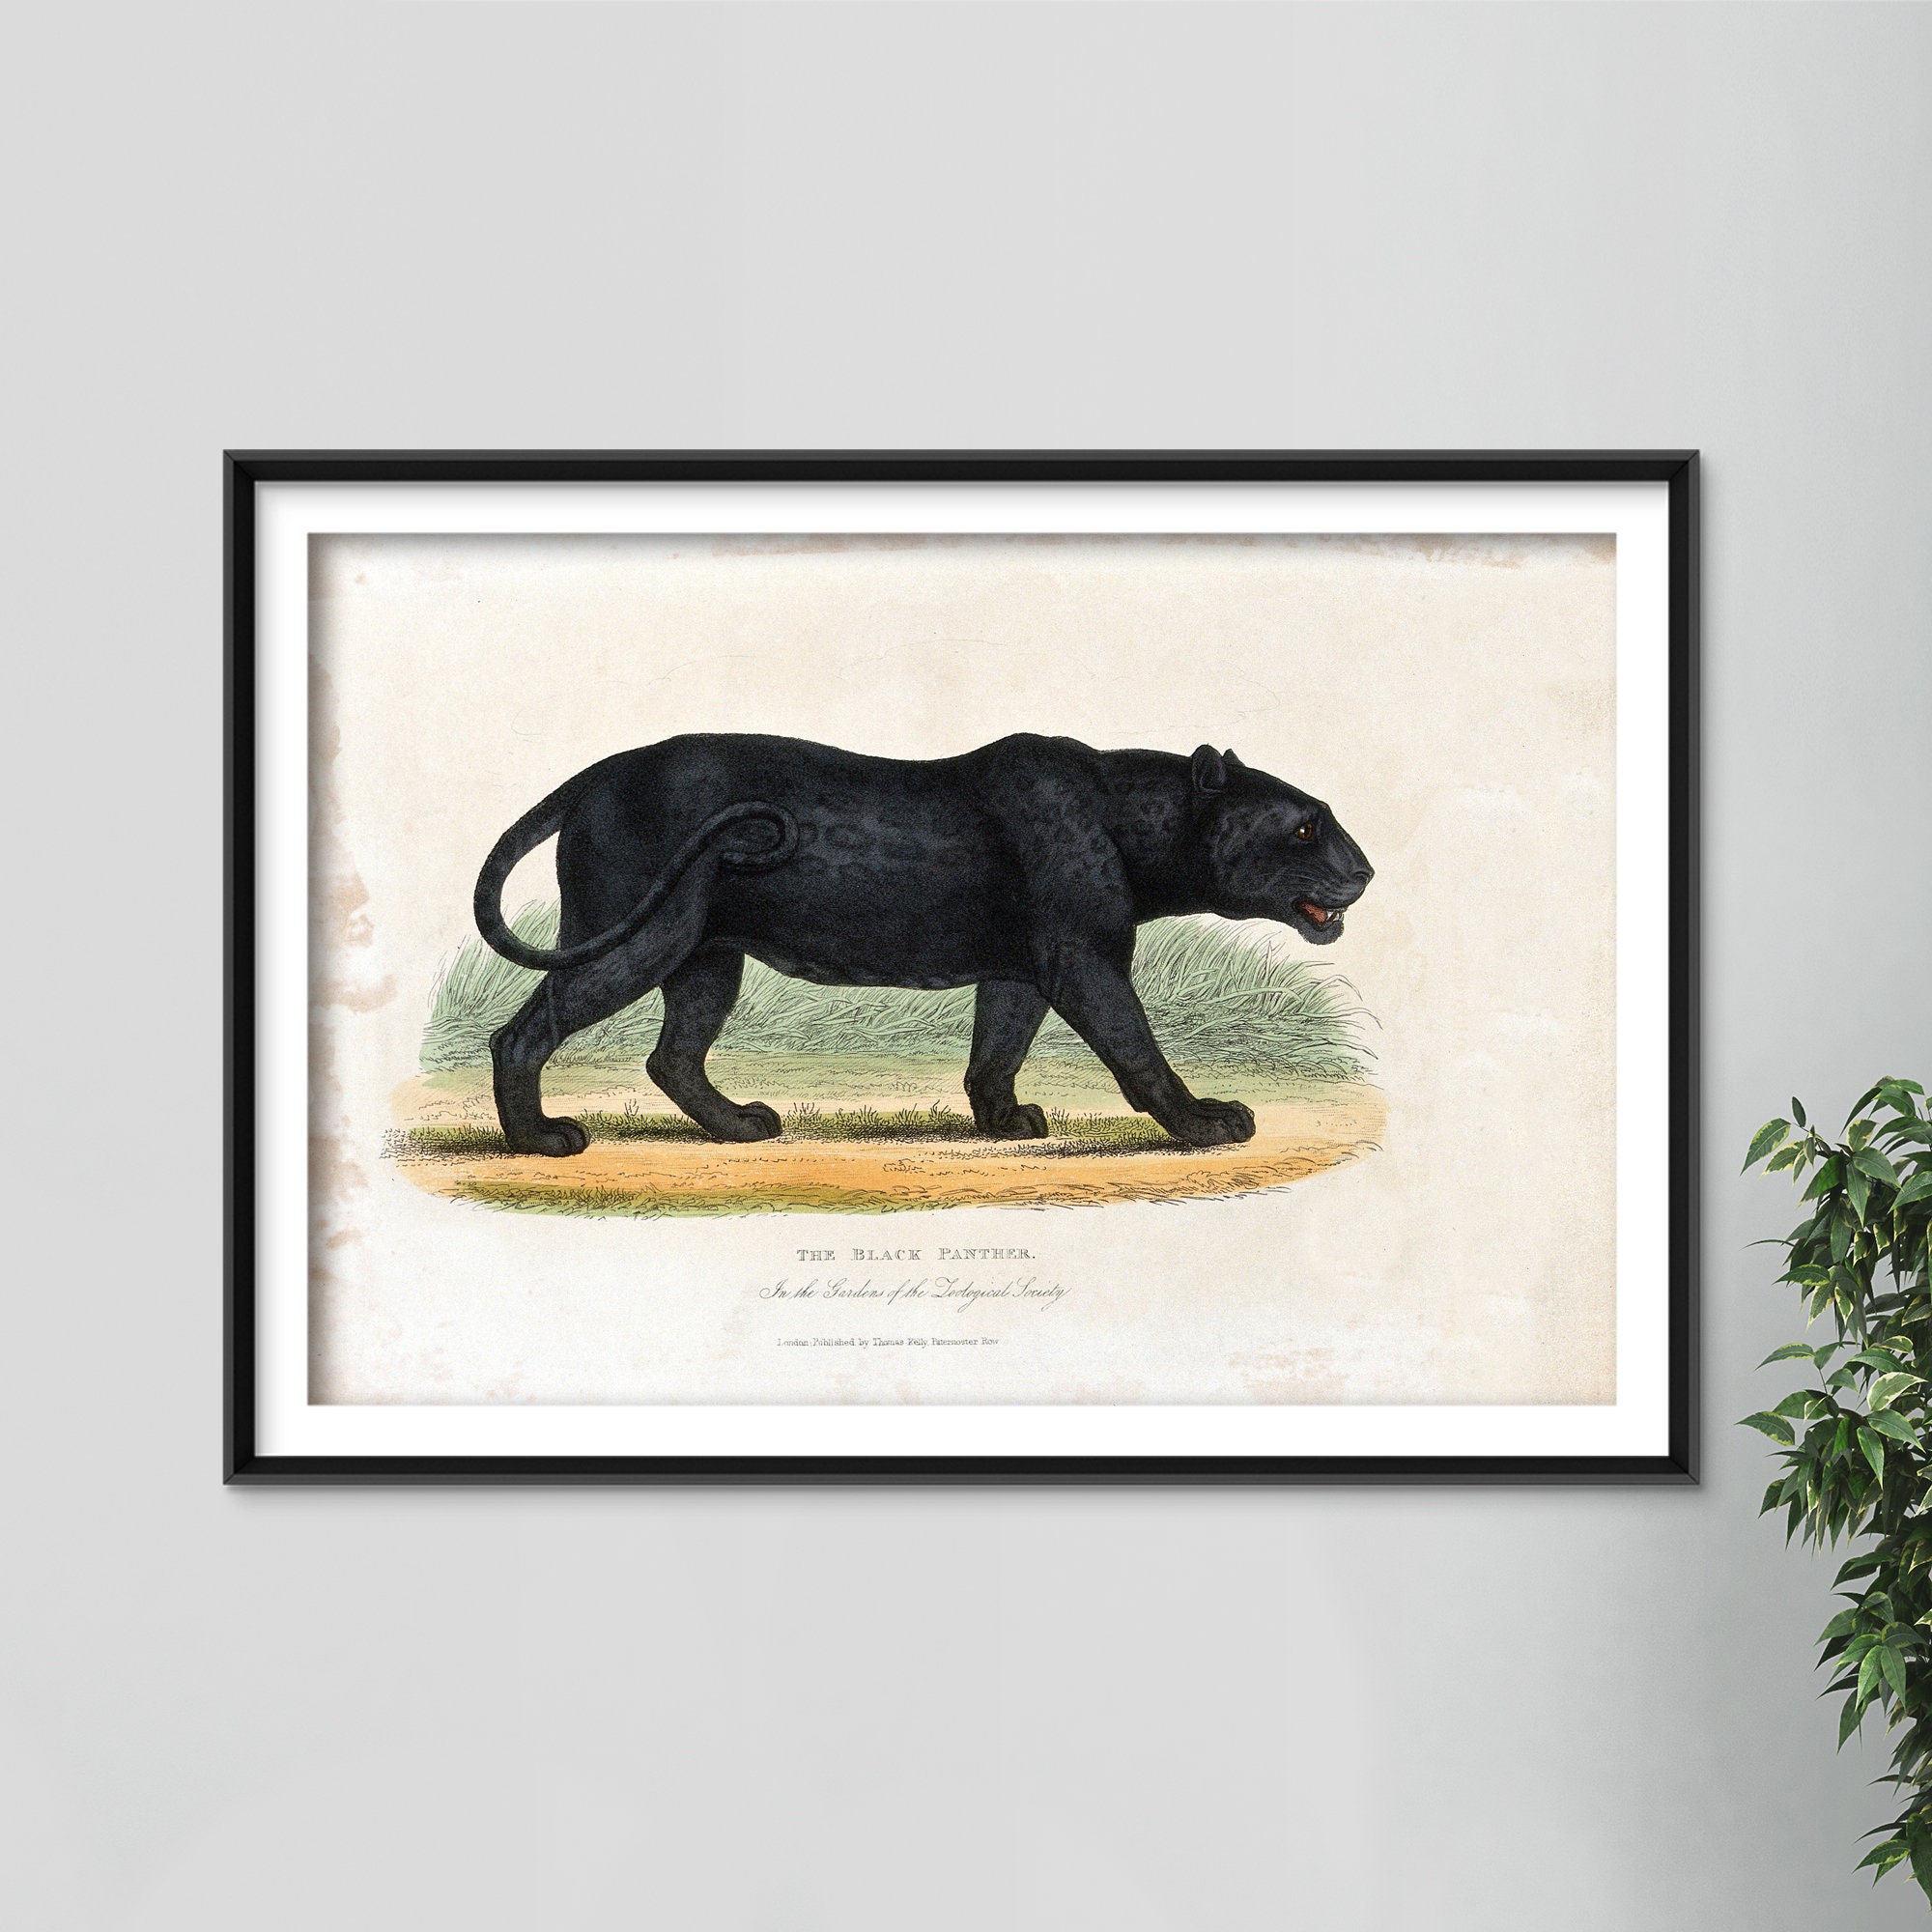 Vintage Drawing Black Panther 1860 Drawing Illustration pic image